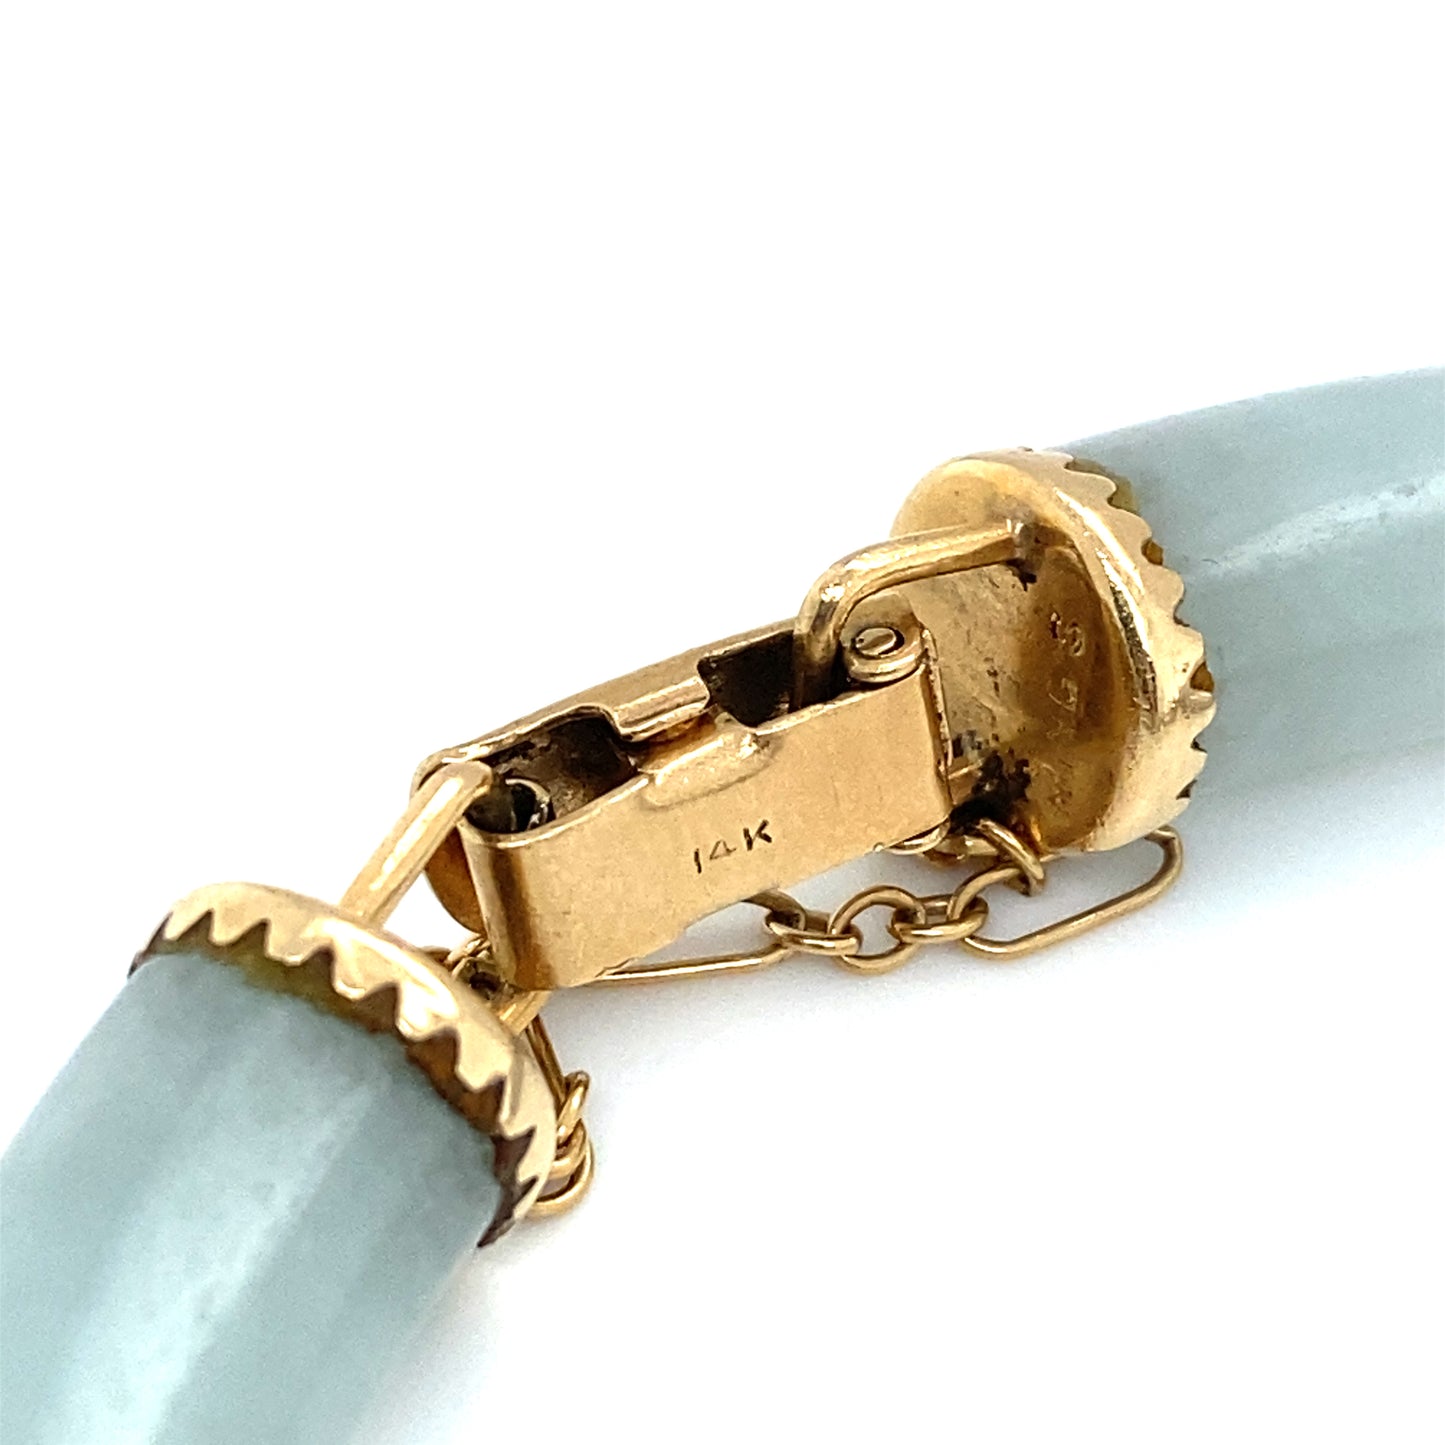 Circa 1980s Chinese White Jade Bar Link Bracelet in 14K Gold